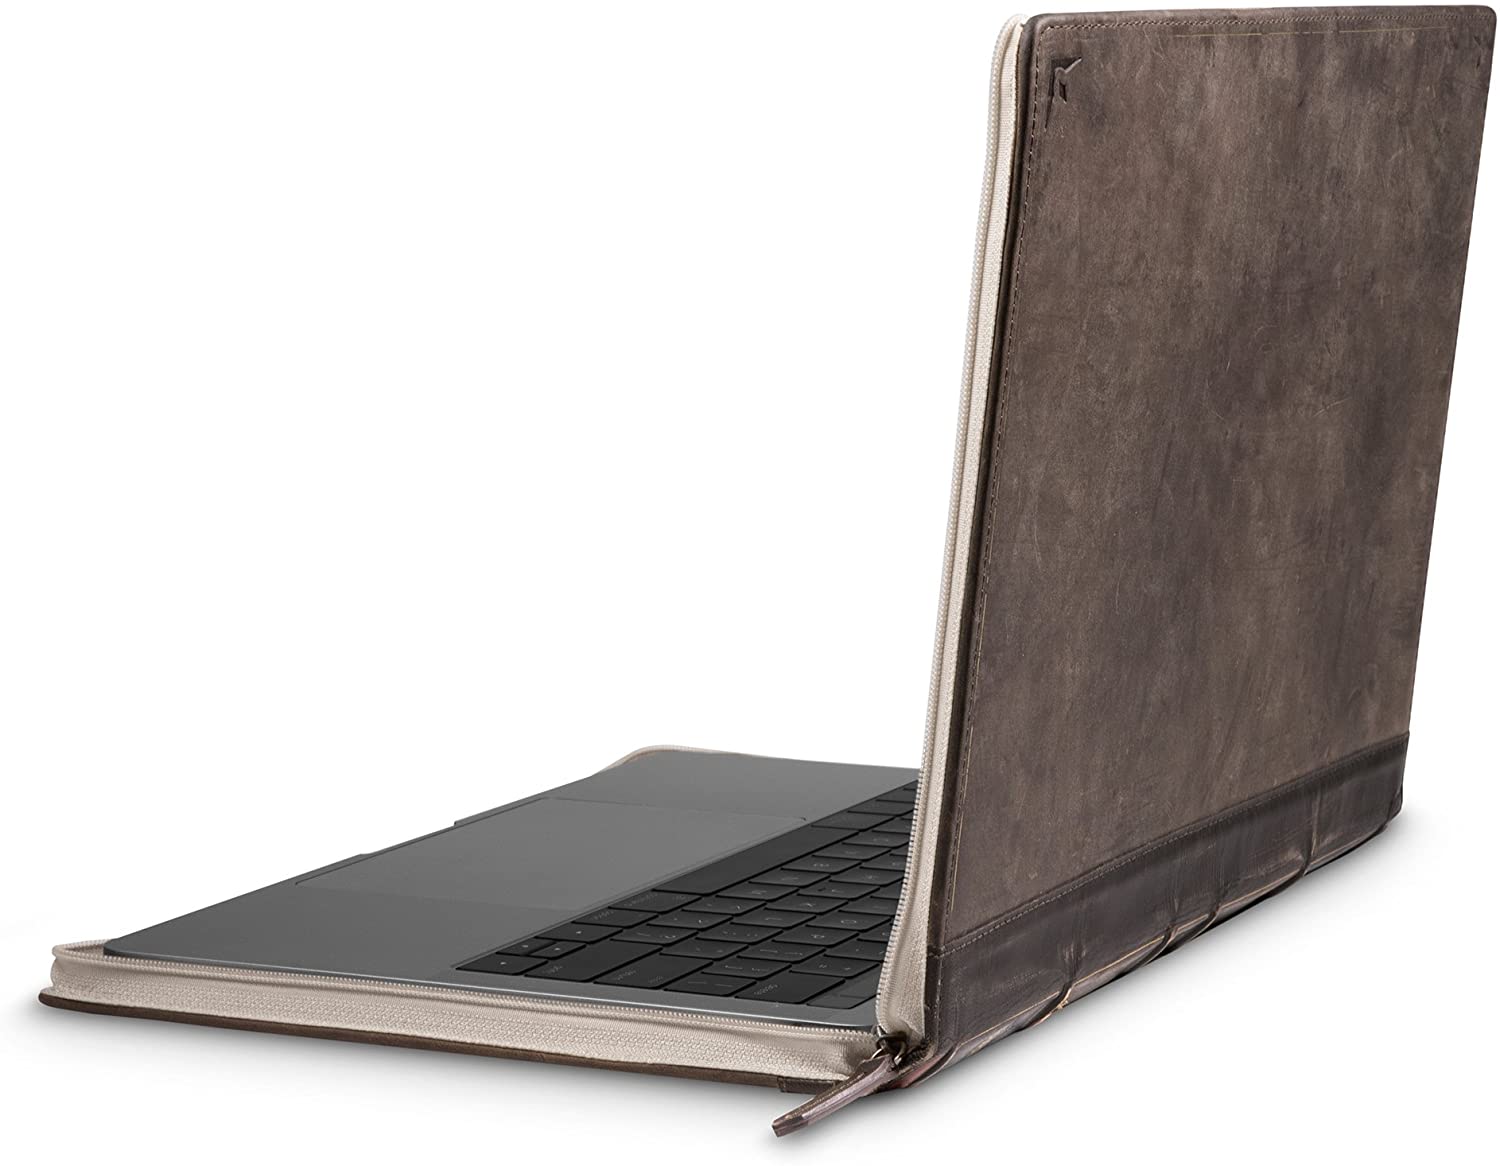 TwelveSouth-BookBook-MacBook-Air-case